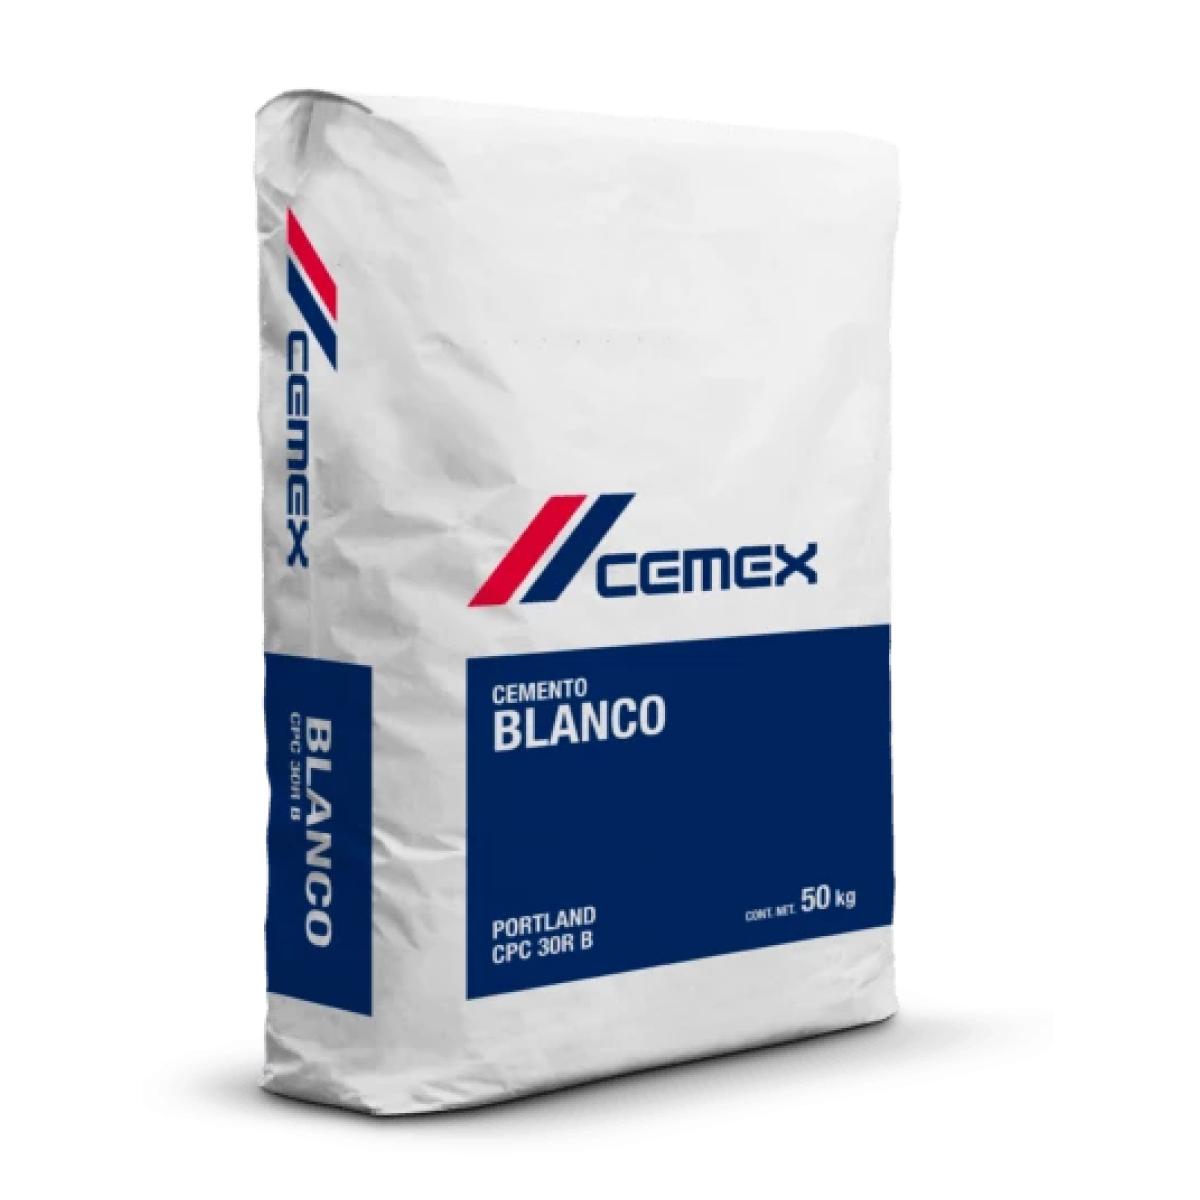 Cemex, Cemento Blanco Cpc30Rb 50 Kg